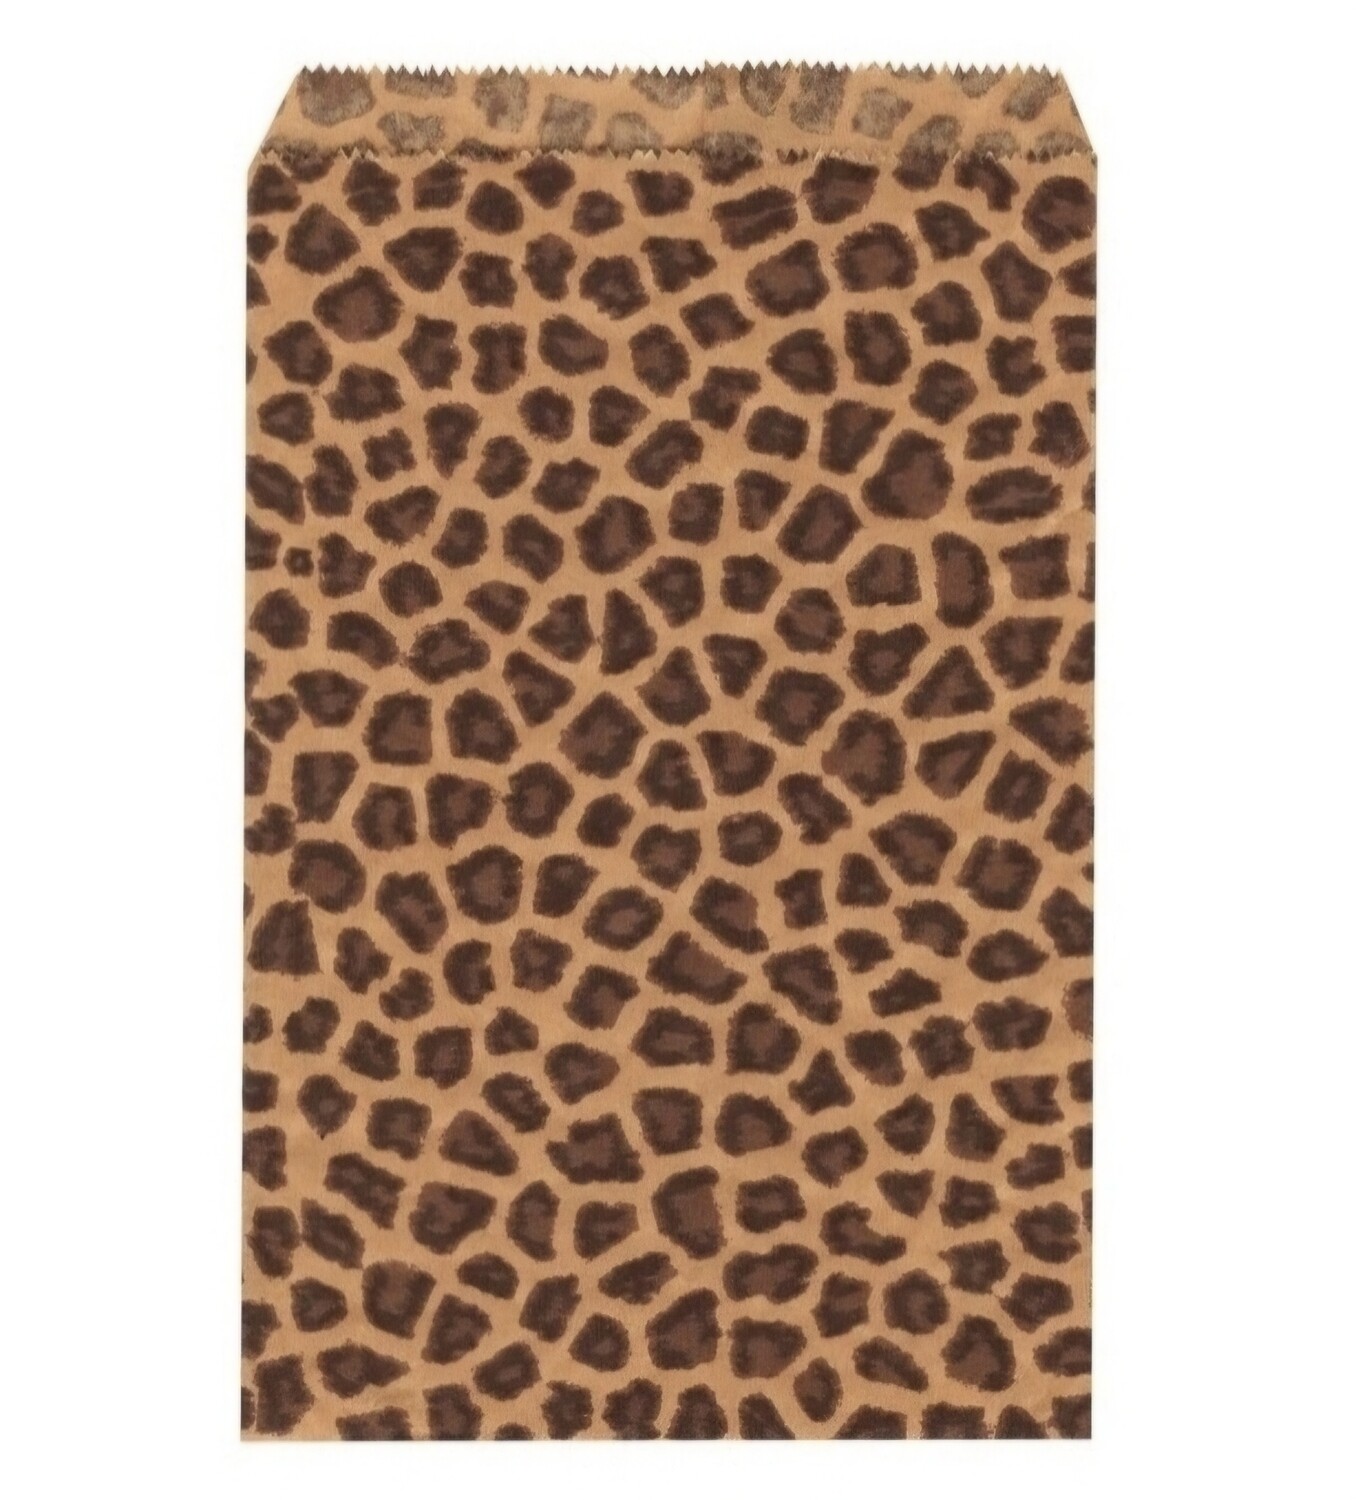 6" X 9" Flat Plain Leopard Prints Paper or Patterned Kraft Bags